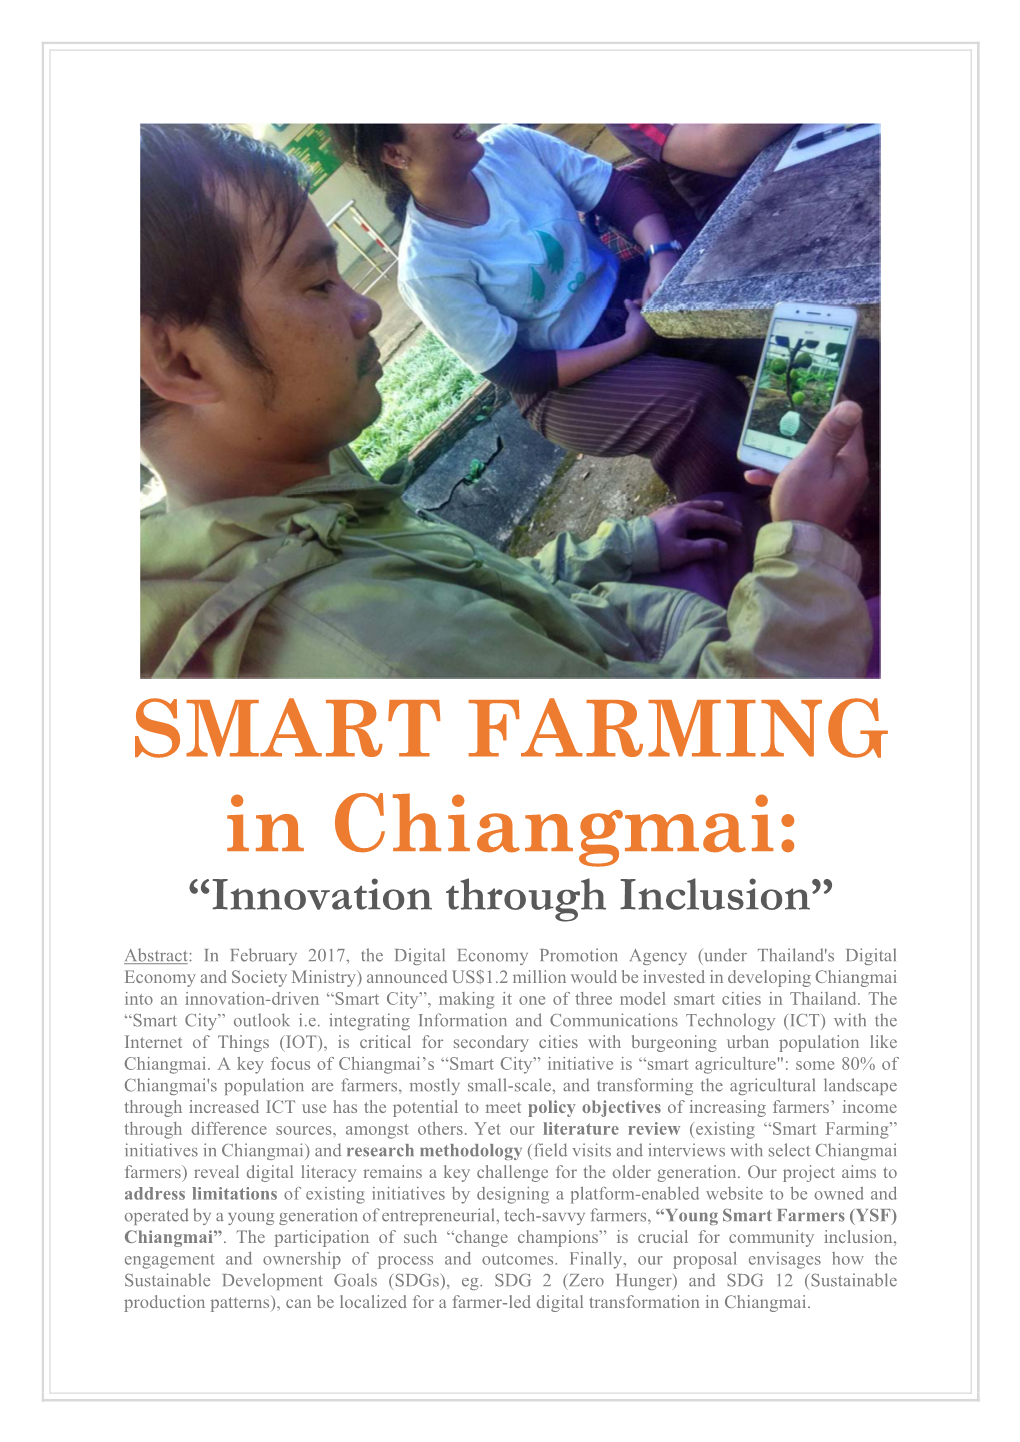 SMART FARMING in Chiangmai: “Innovation Through Inclusion”